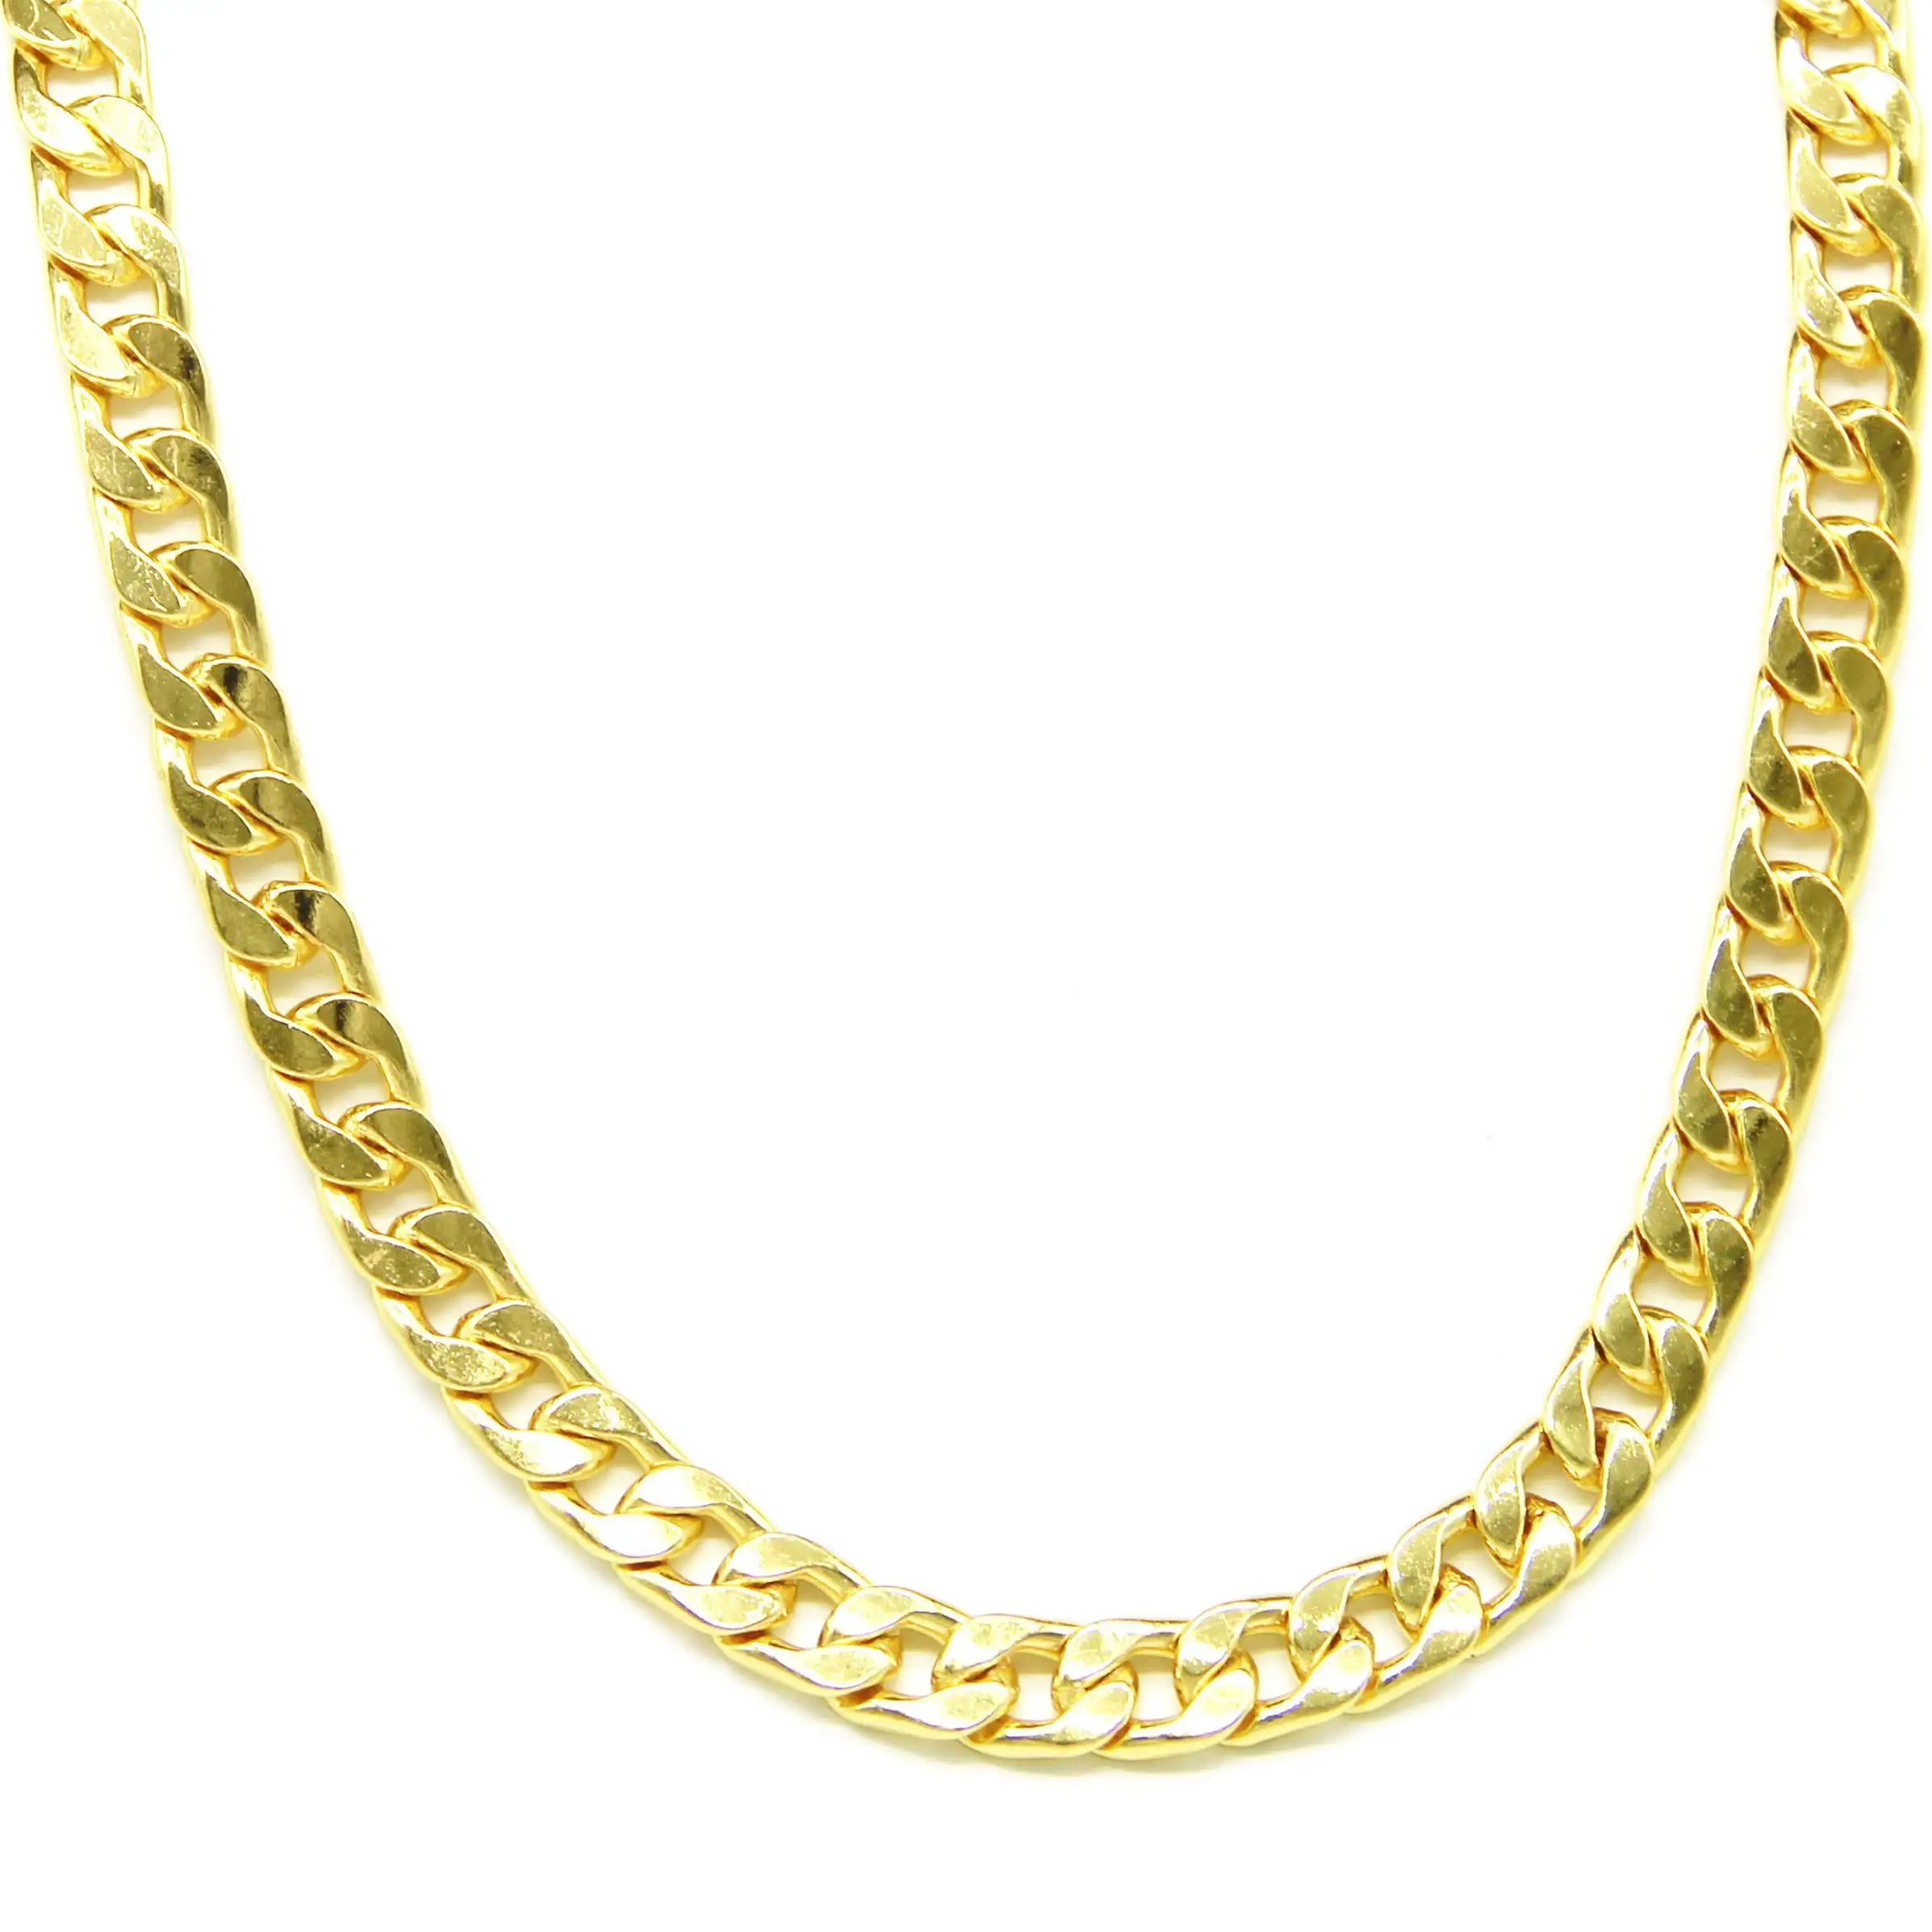 fake gold chains costume jewelry mishkanet com